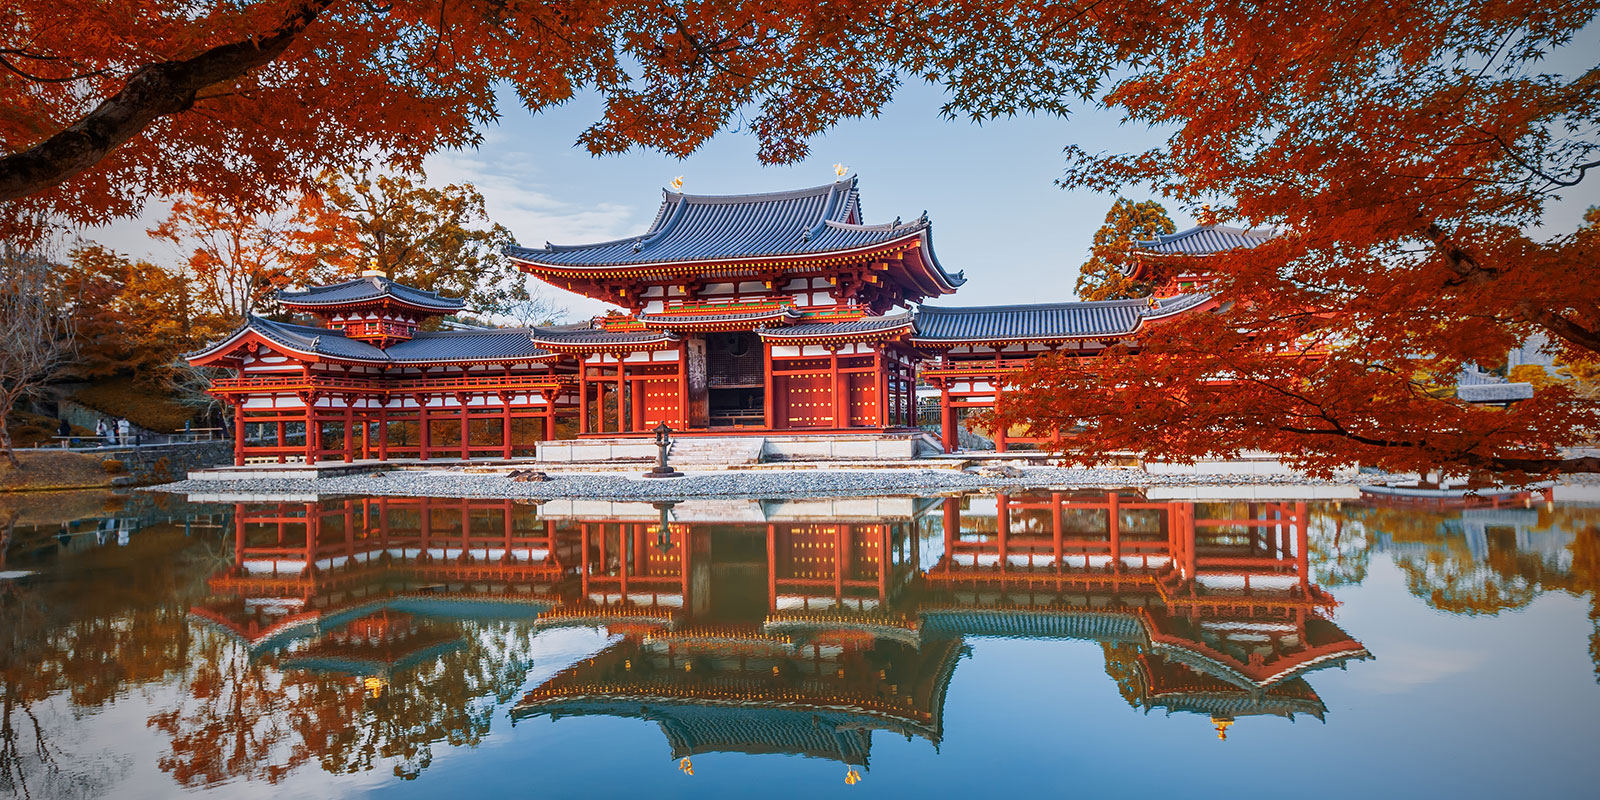 Byodoin temple | Shutterstock